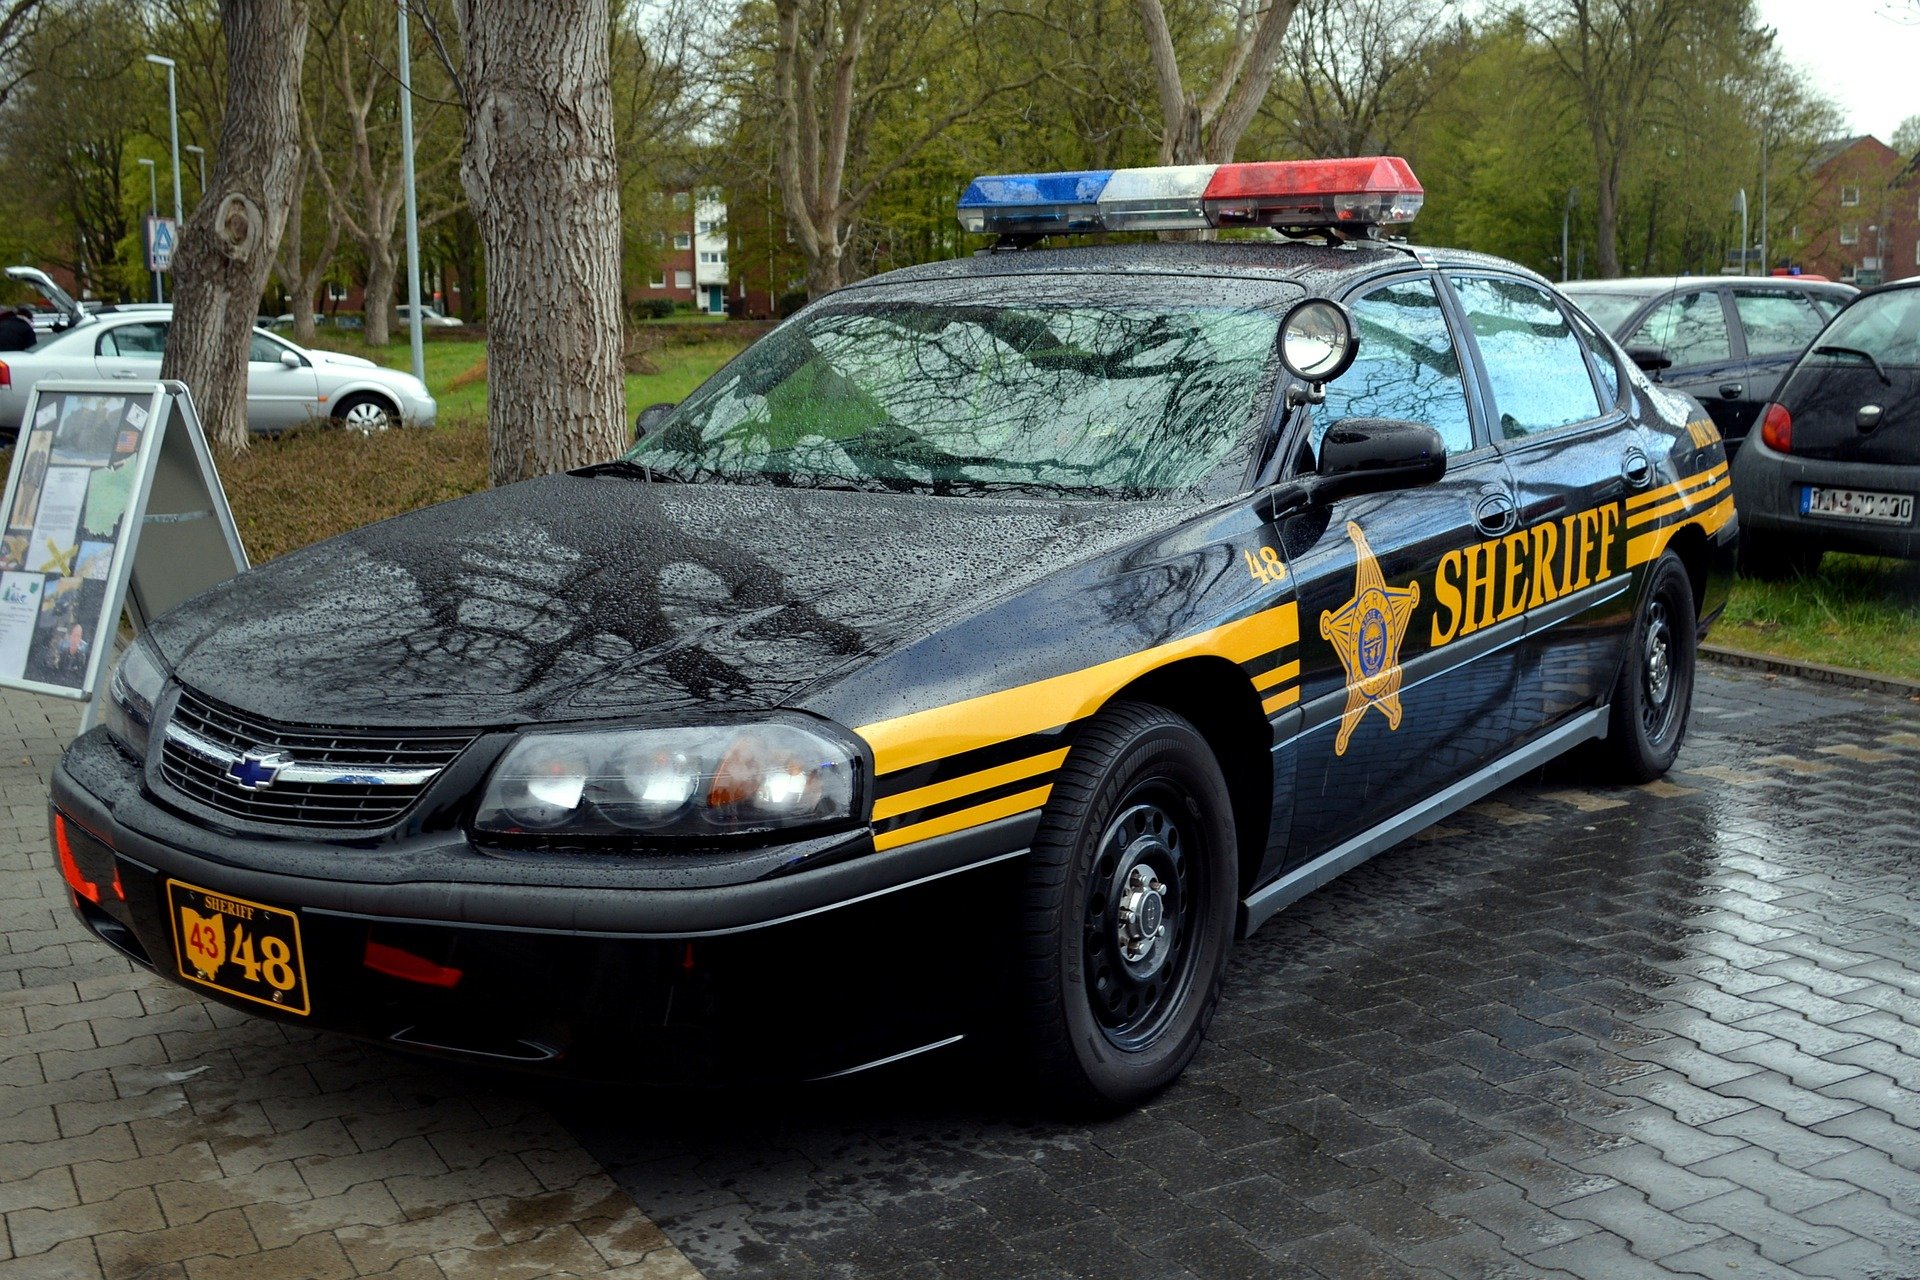 A parked Sheriff's police vehicle | Source: Pixabay 